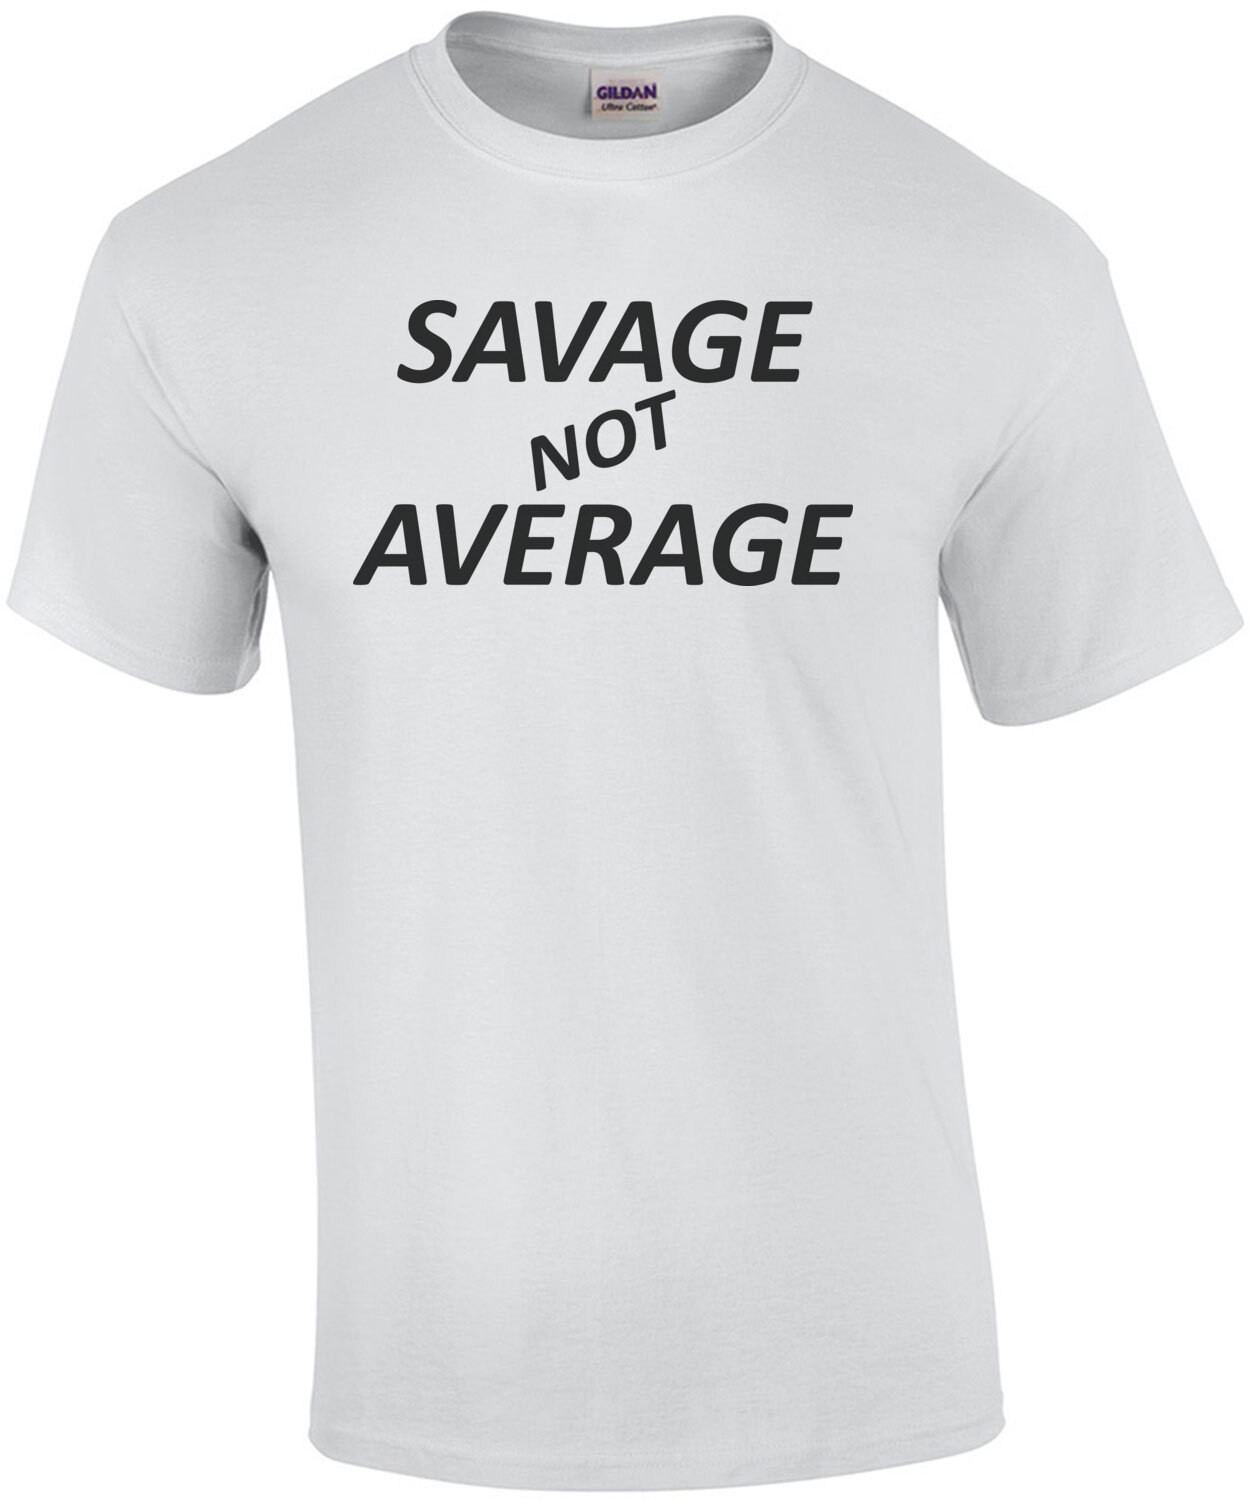 Savage Not Average - Funny T-Shirt